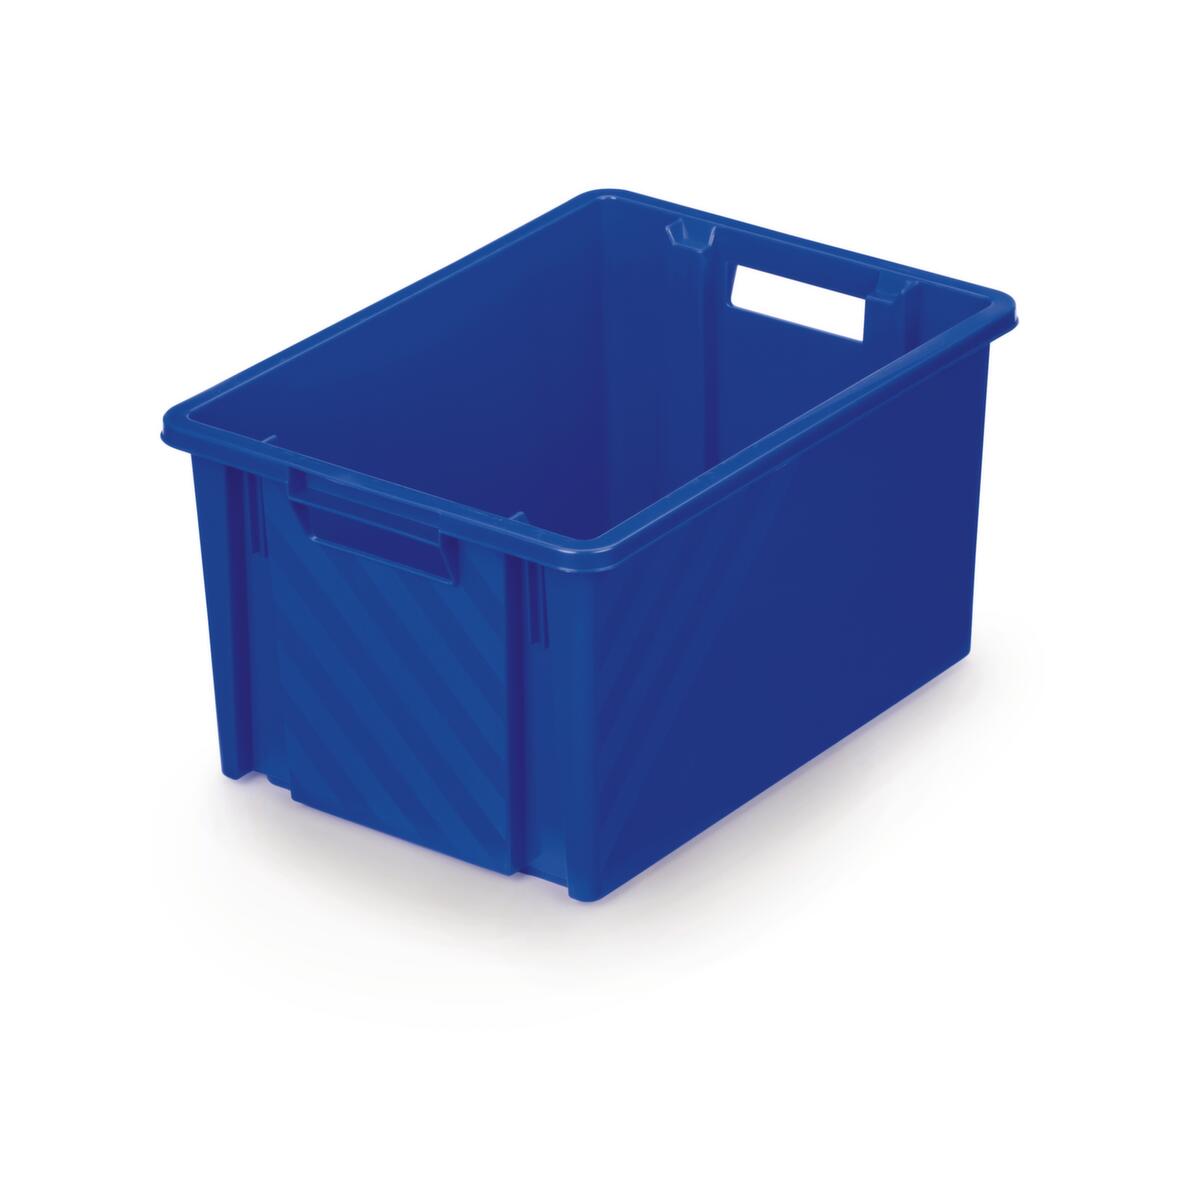 Drehstapelbehälter, blau, Inhalt 10 l Standard 1 ZOOM